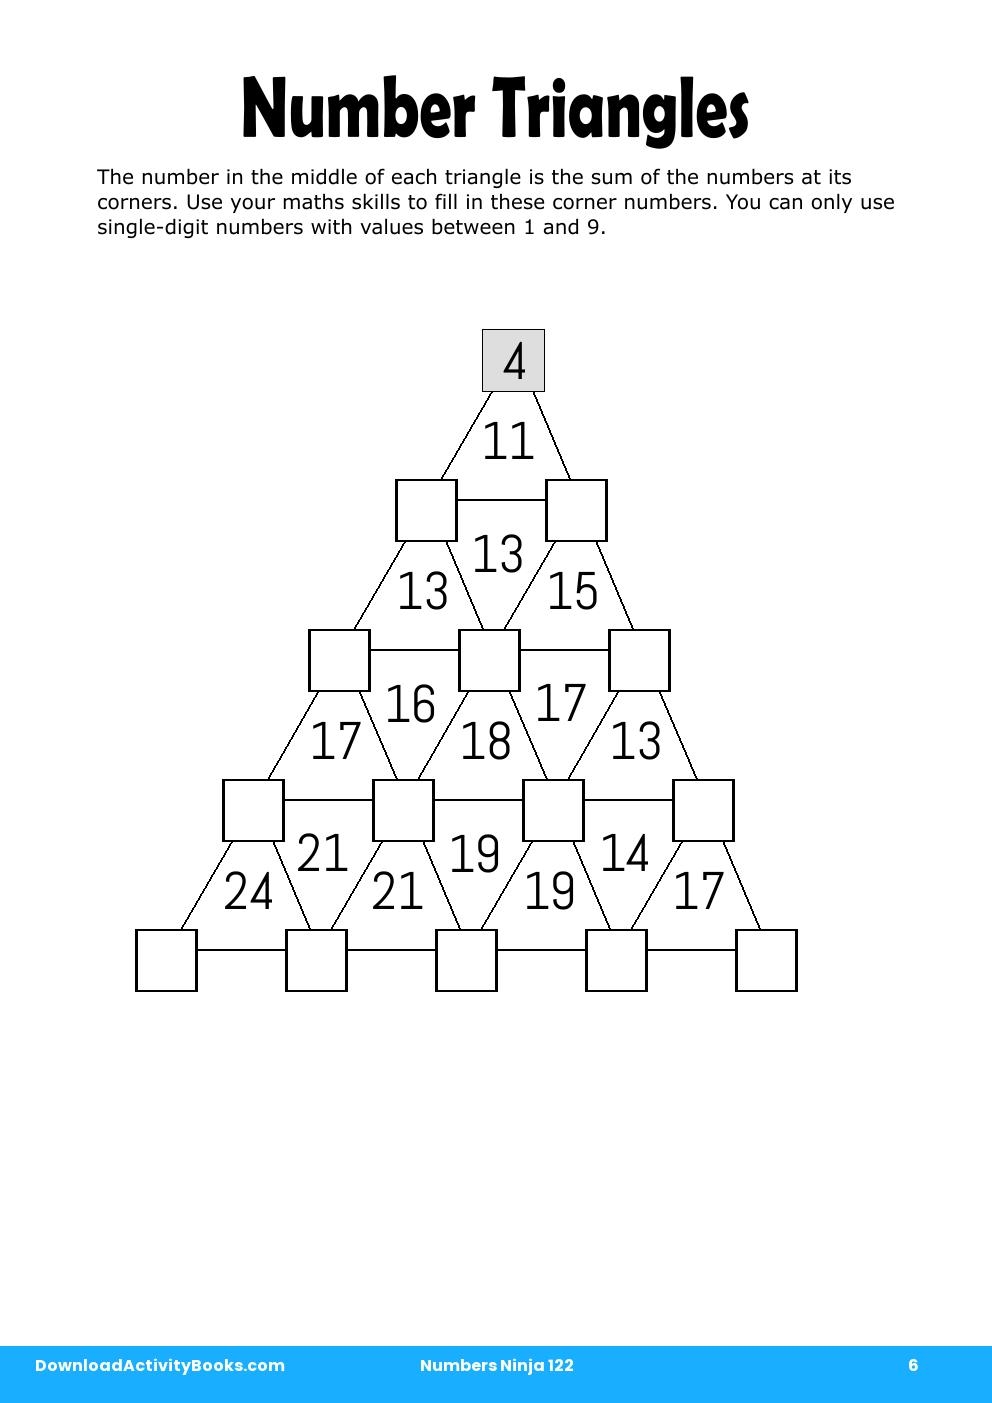 Number Triangles in Numbers Ninja 122